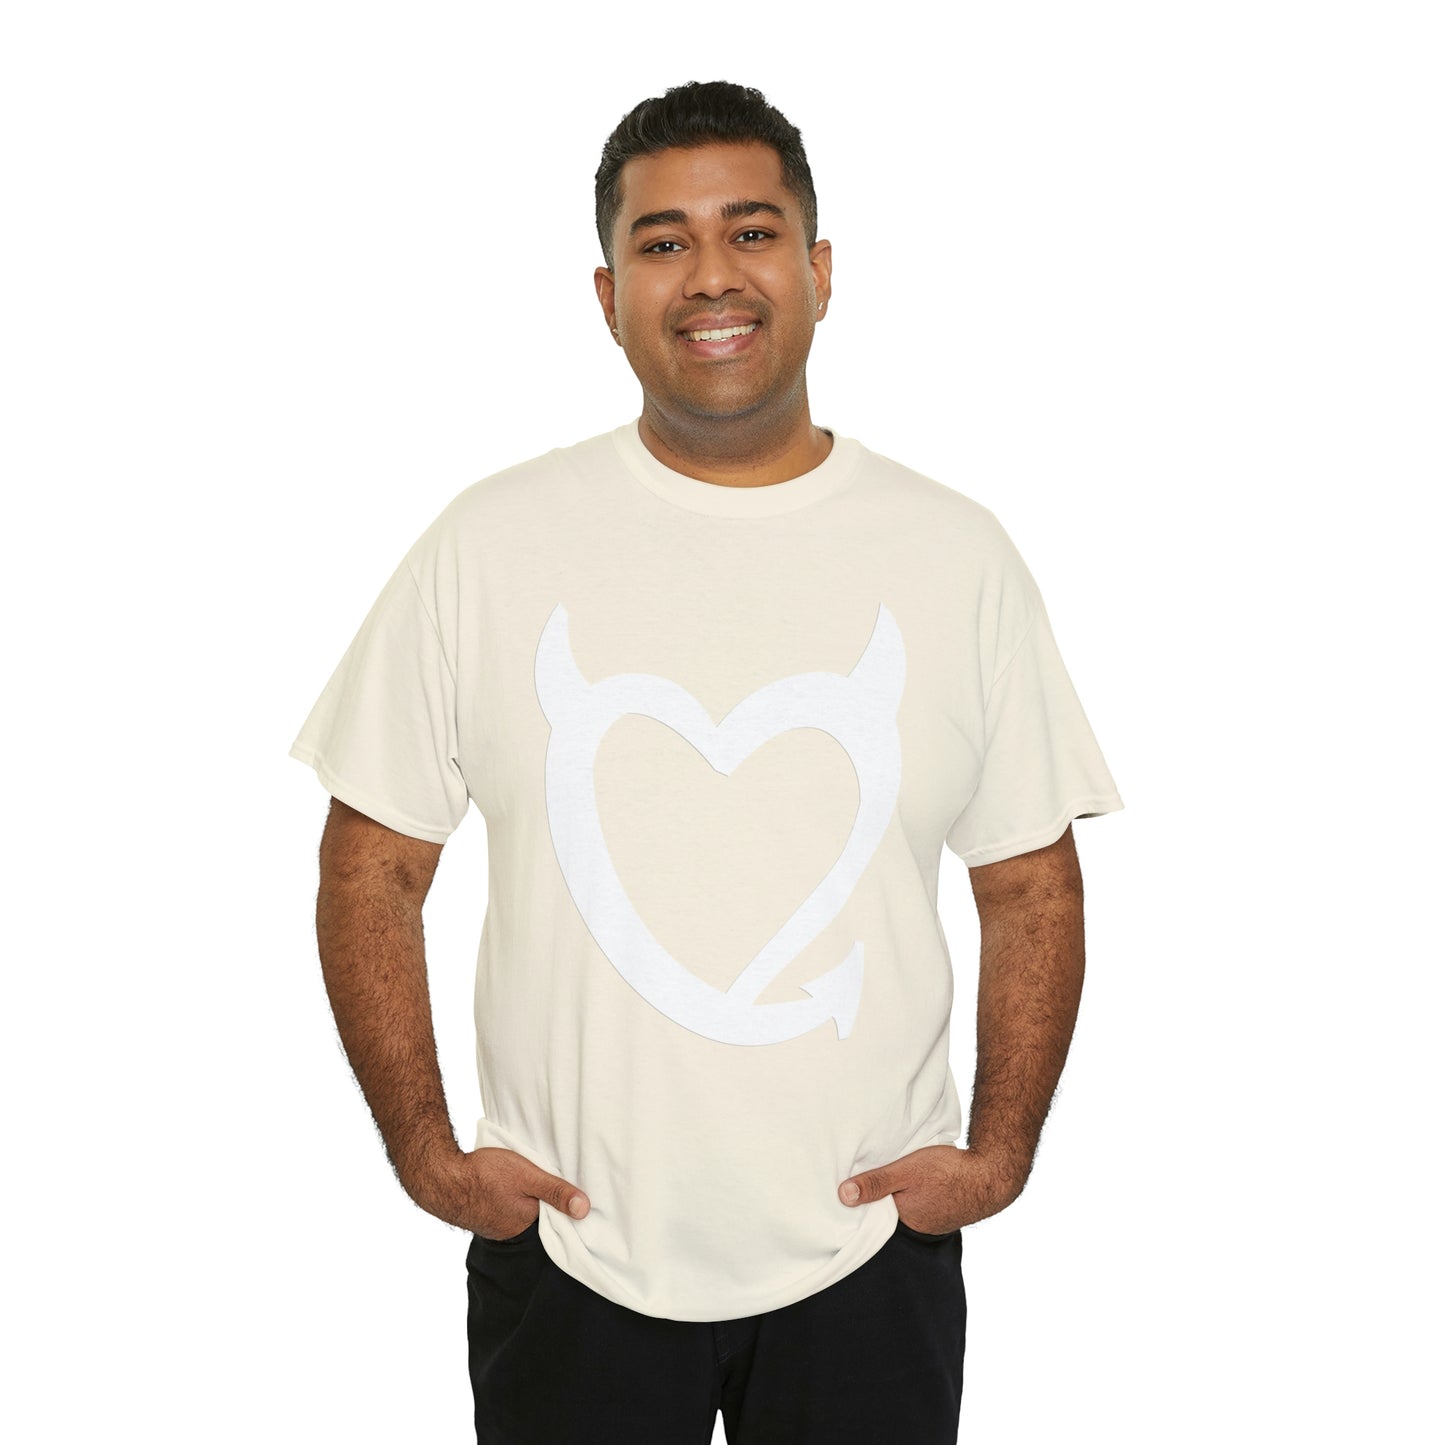 Bad Girls Heart (White Logo) Shirt Up to 5x